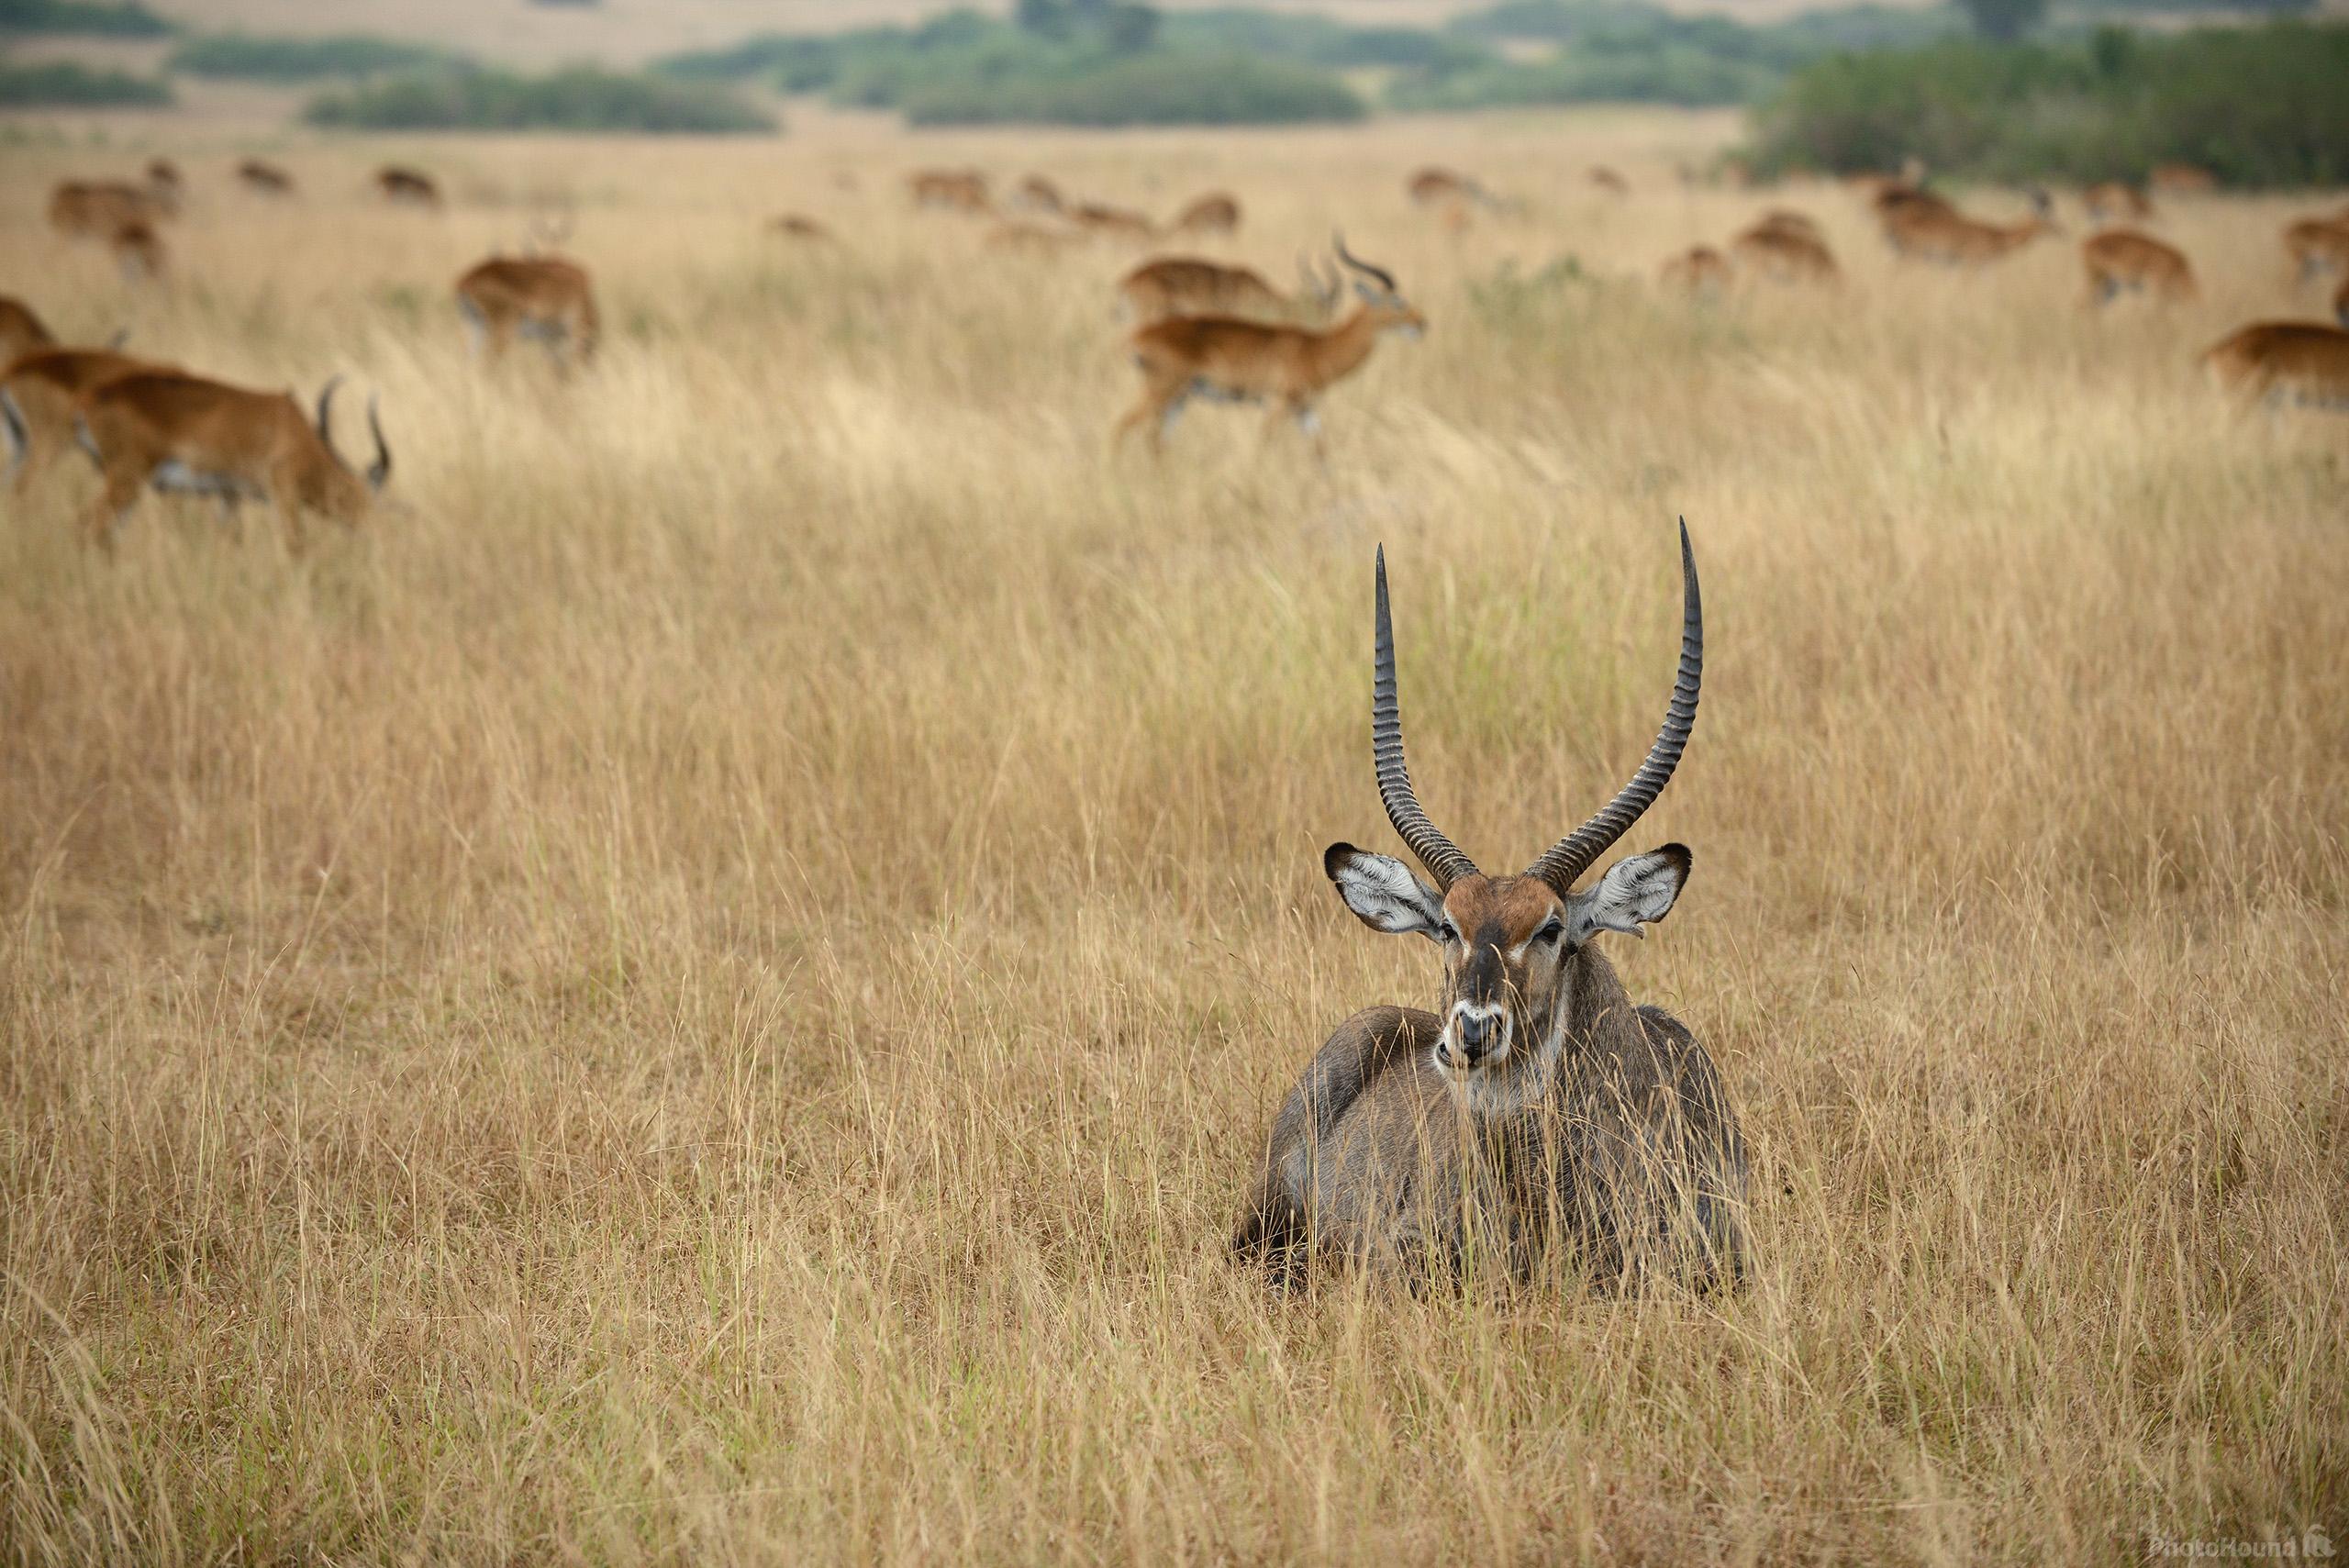 Image of Queen Elizabeth NP - Kasenyi Plains by Luka Esenko